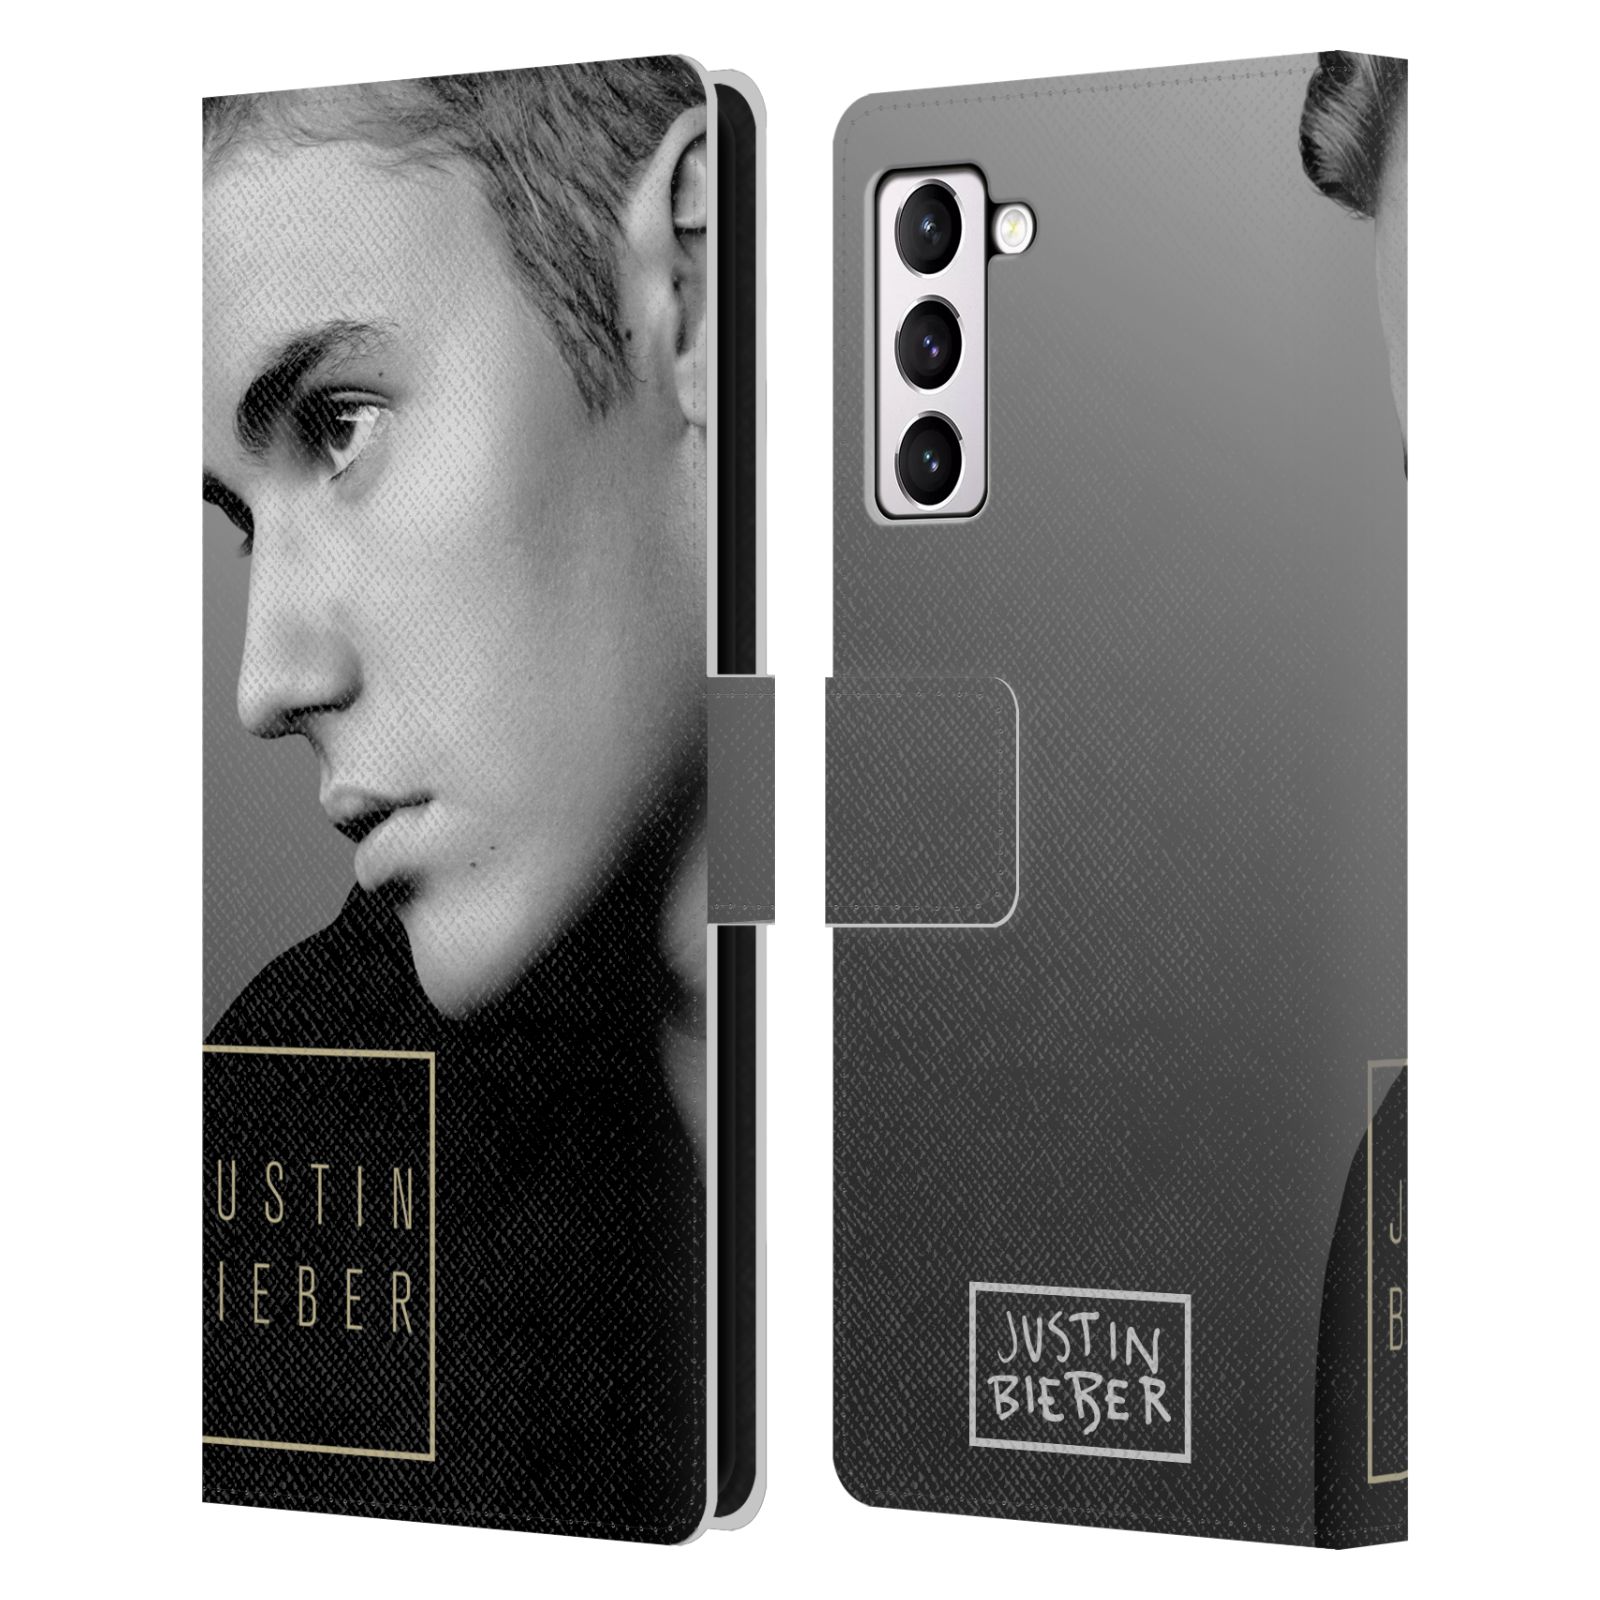 Pouzdro HEAD CASE na mobil Samsung Galaxy S21+ 5G / S21 PLUS 5G  Justin Bieber - černobílé zrcadlo